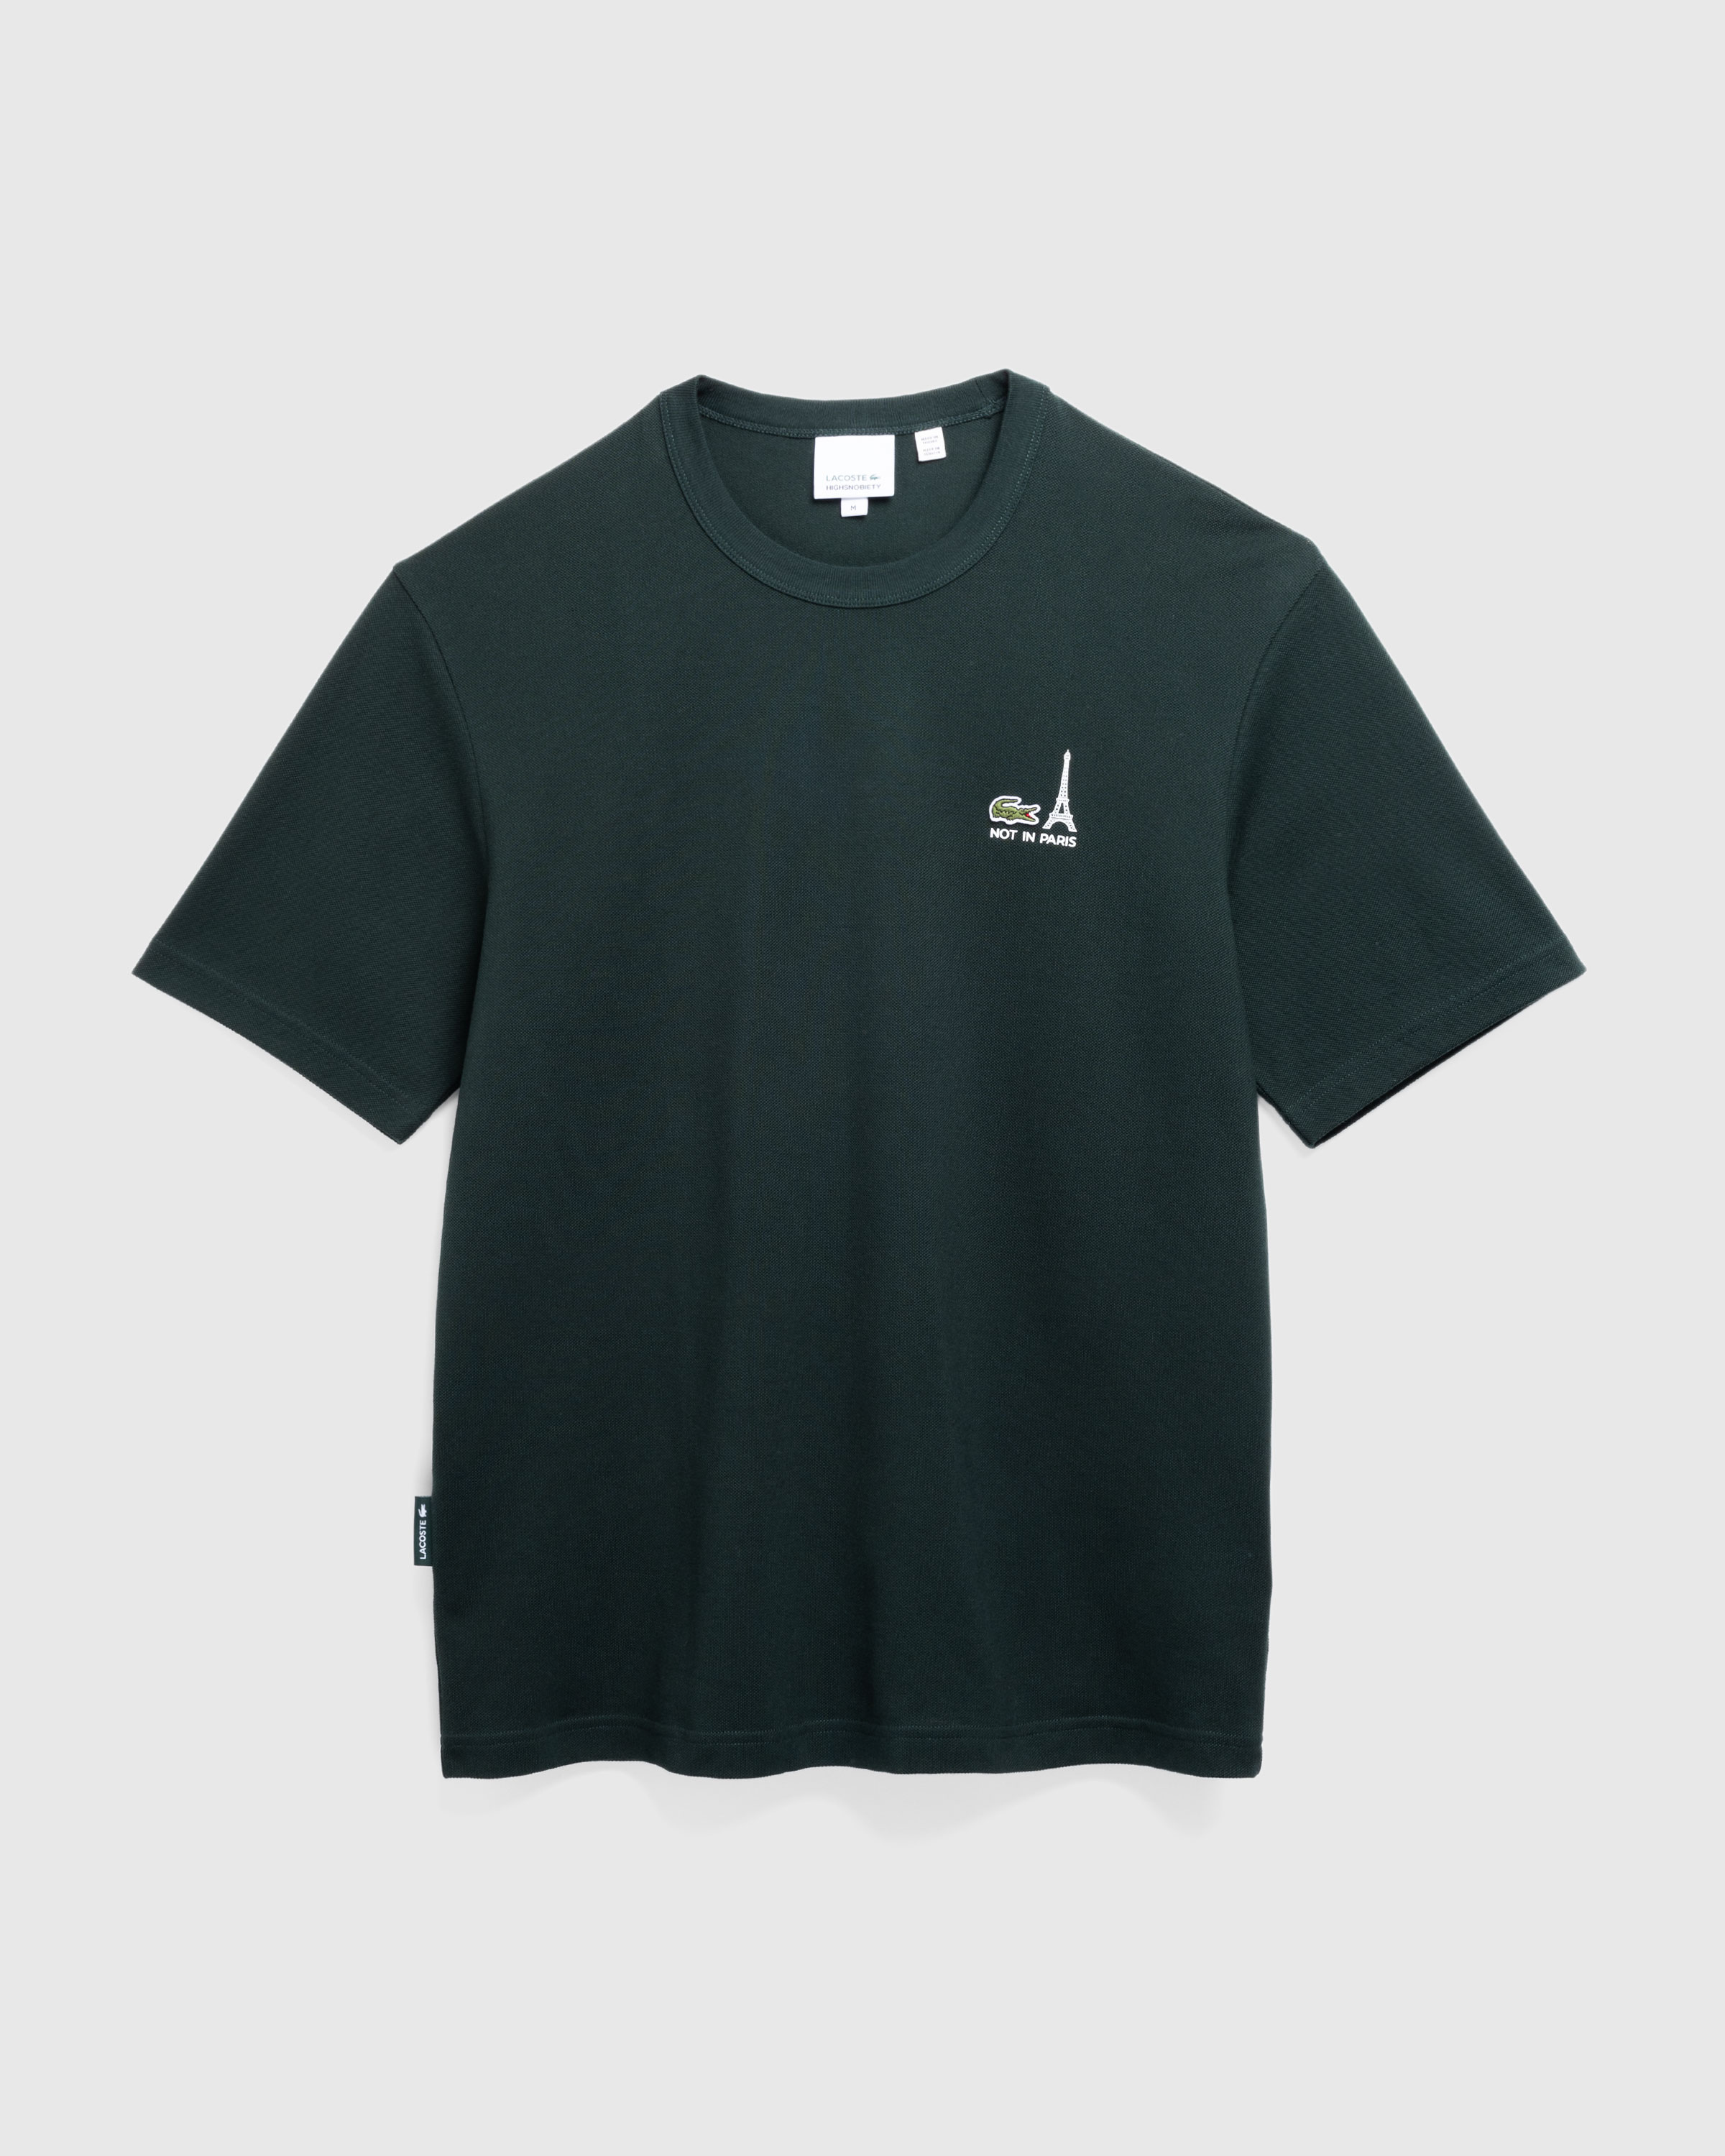 Lacoste x Highsnobiety – Piqué T-Shirt Green - T-Shirts - Green - Image 1